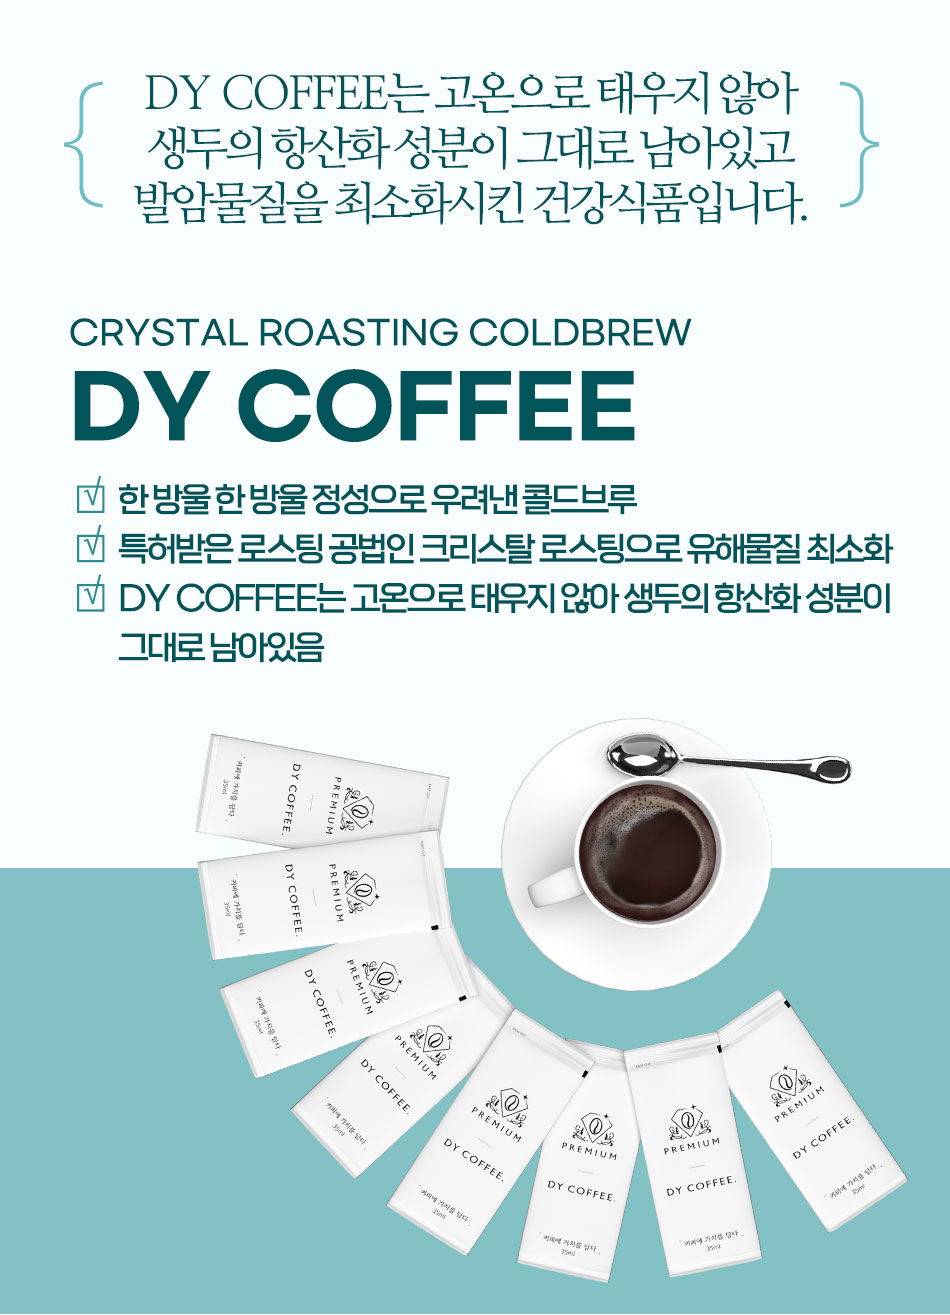 dycoffee-02.jpg